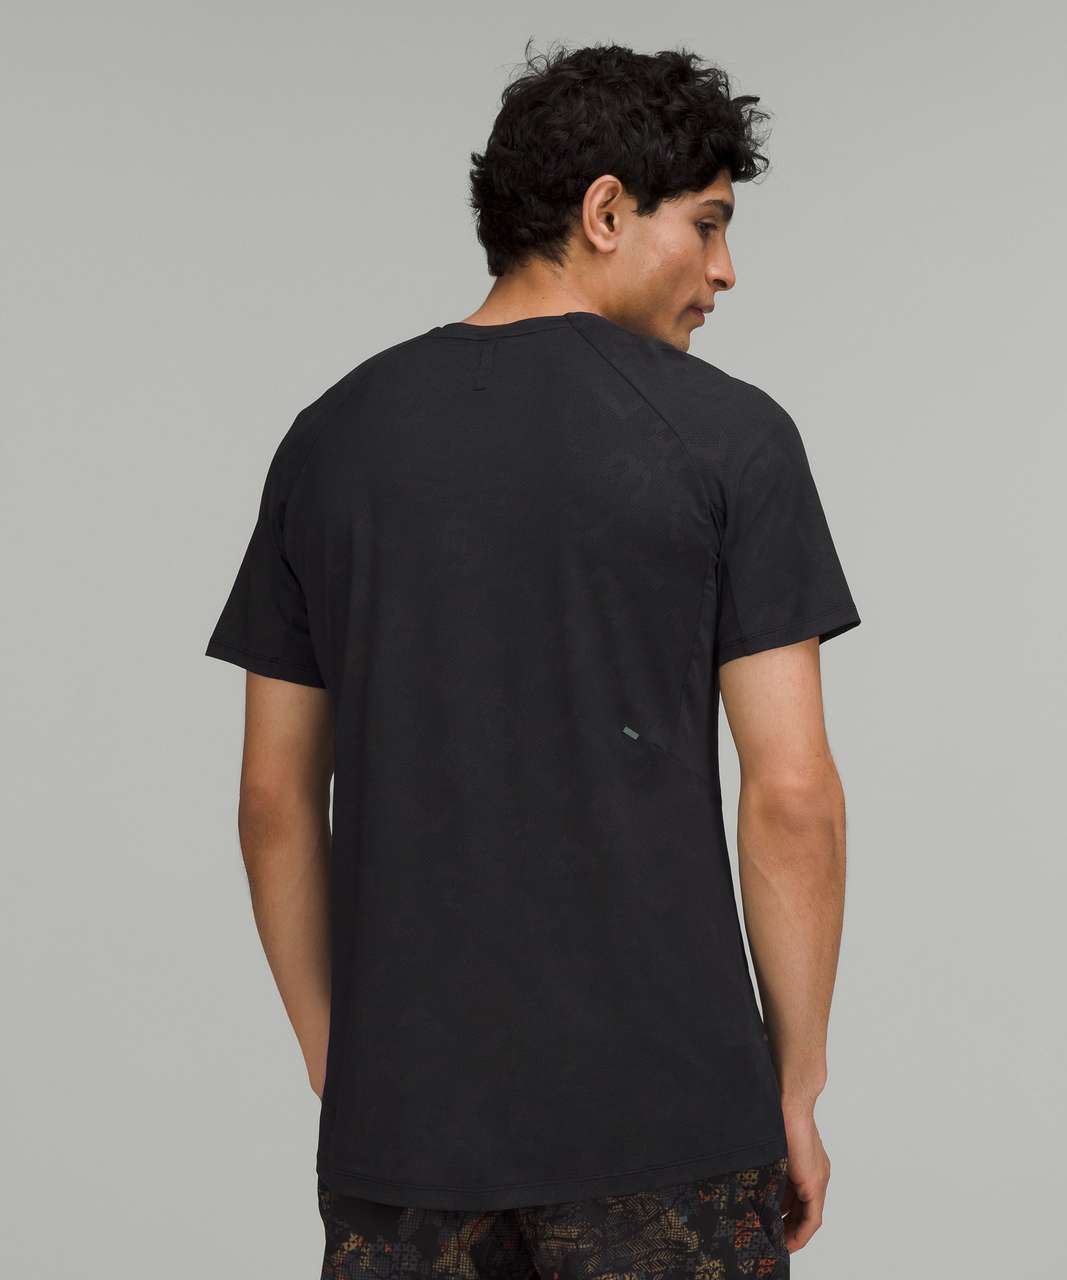 Lululemon Textured Training Short Sleeve Shirt - Glitch Code Camo Jacquard Black Obsidian